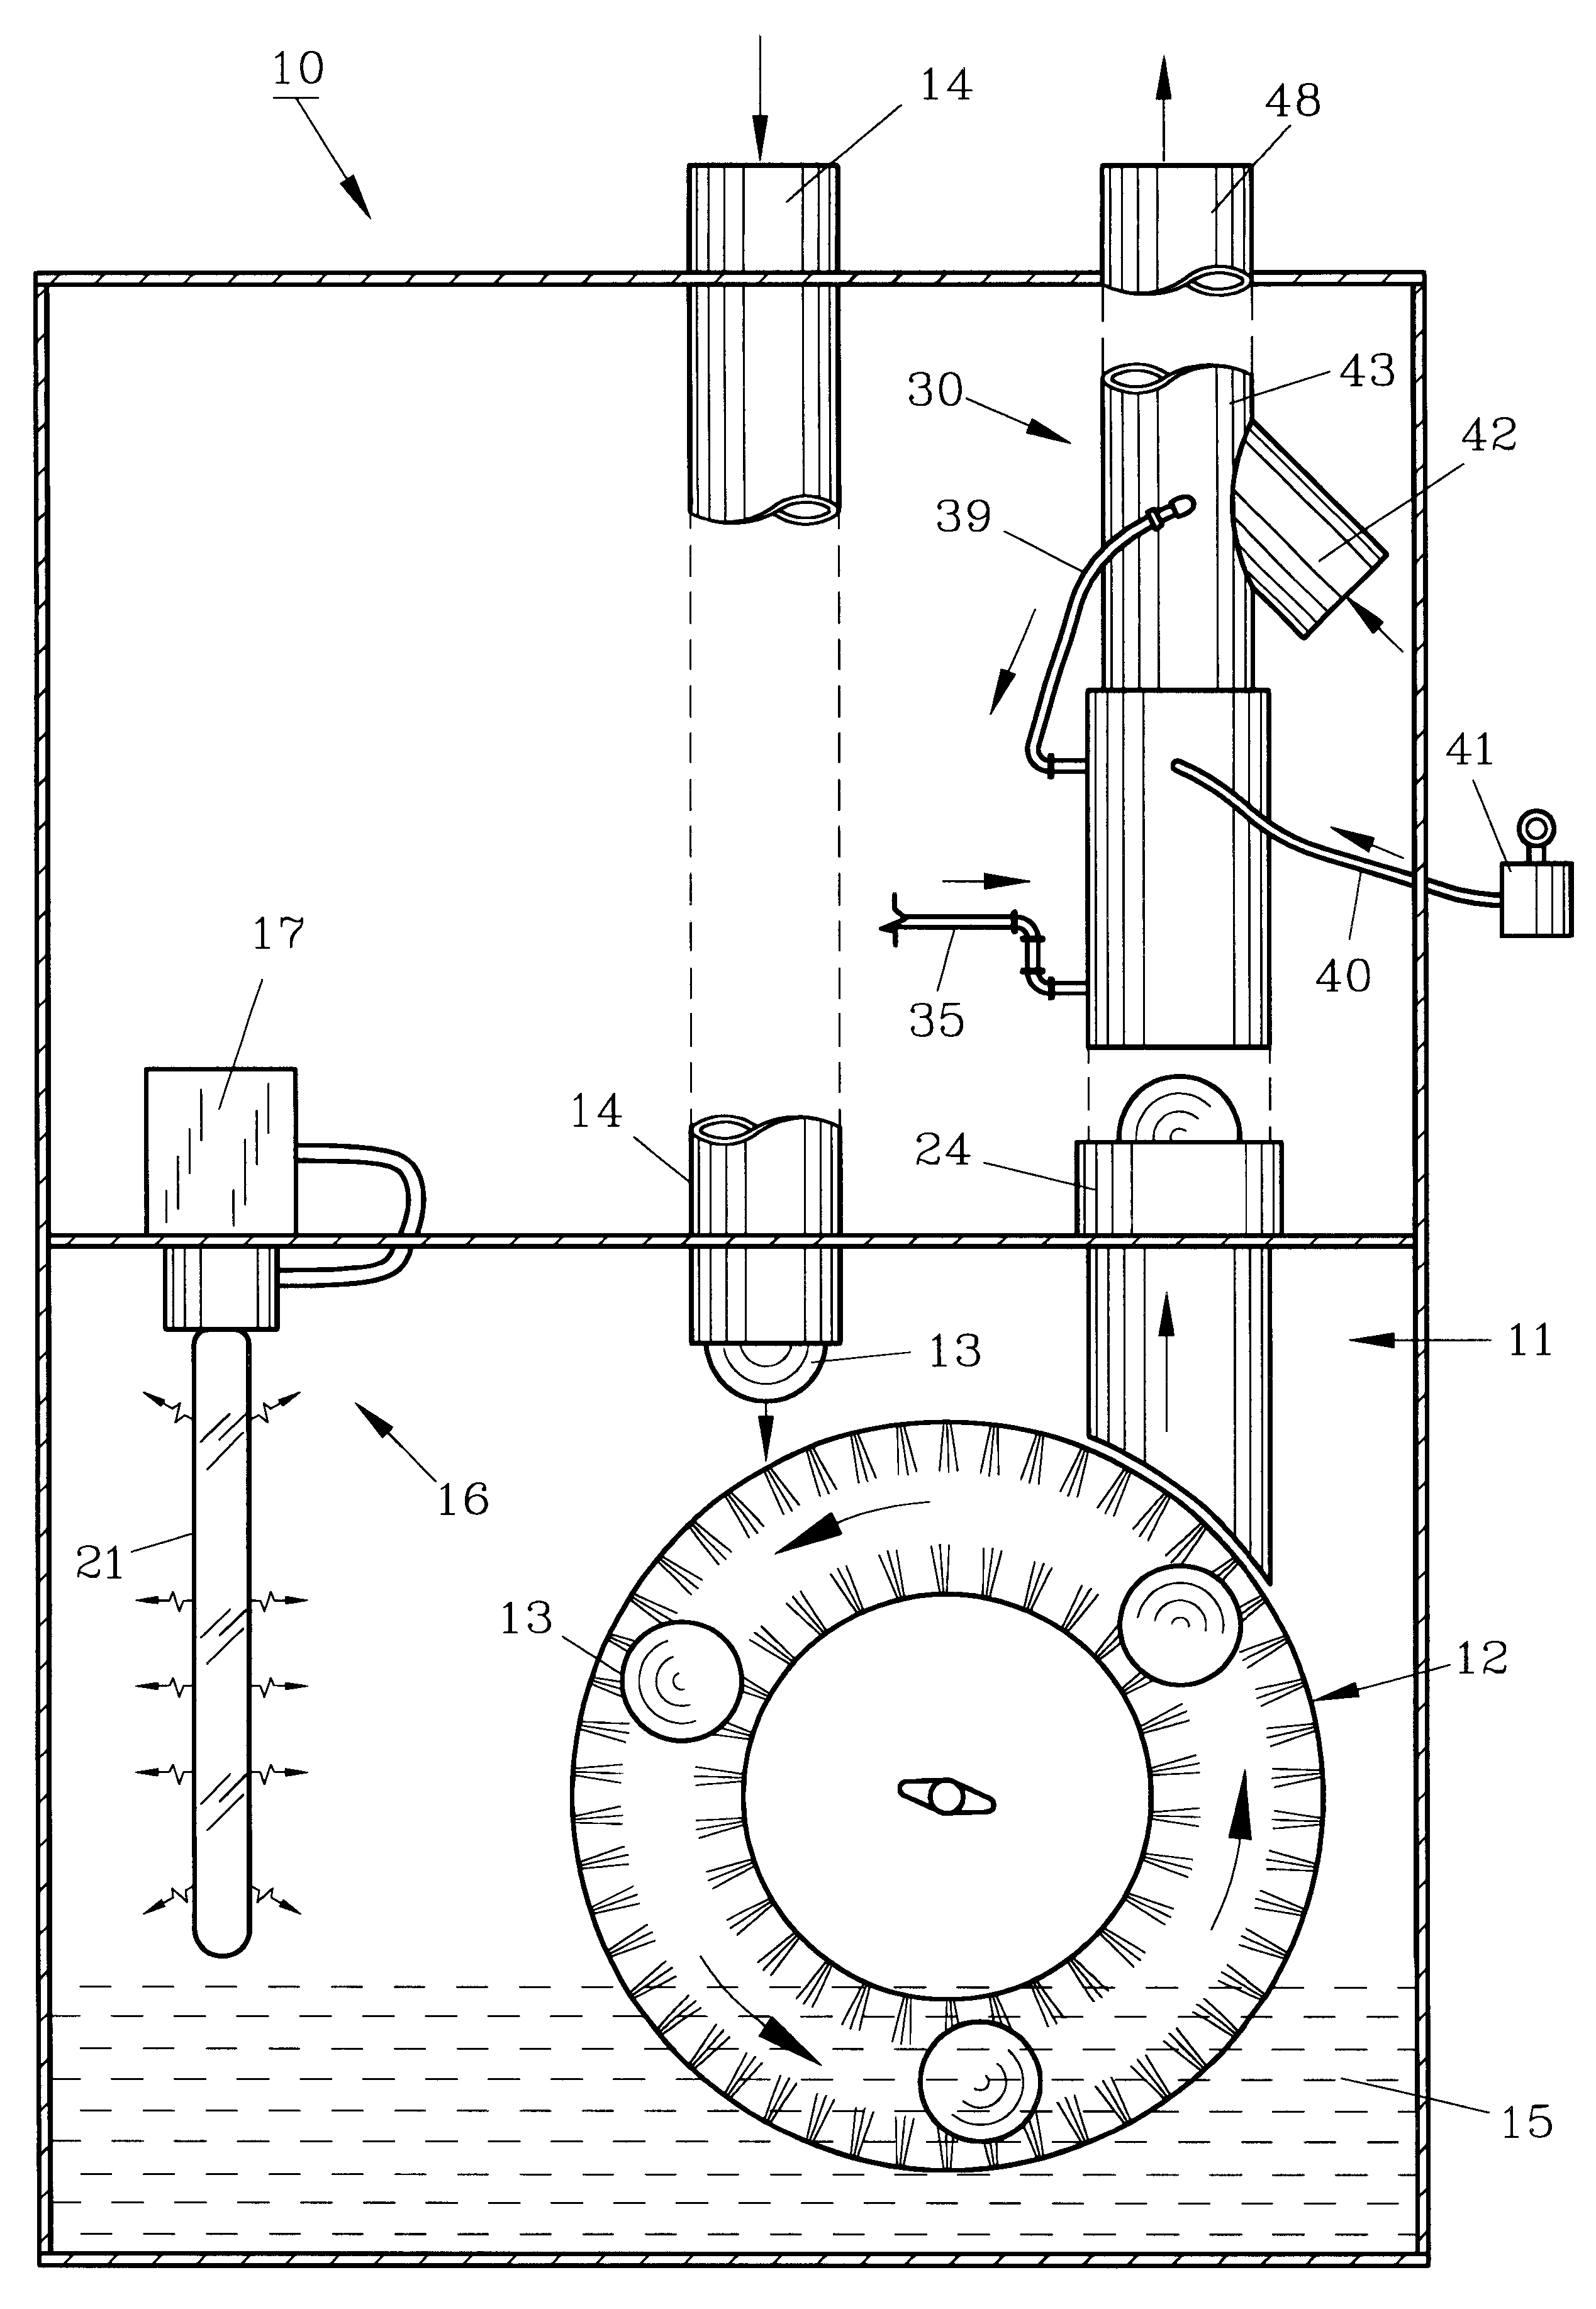 Ball washing apparatus and method